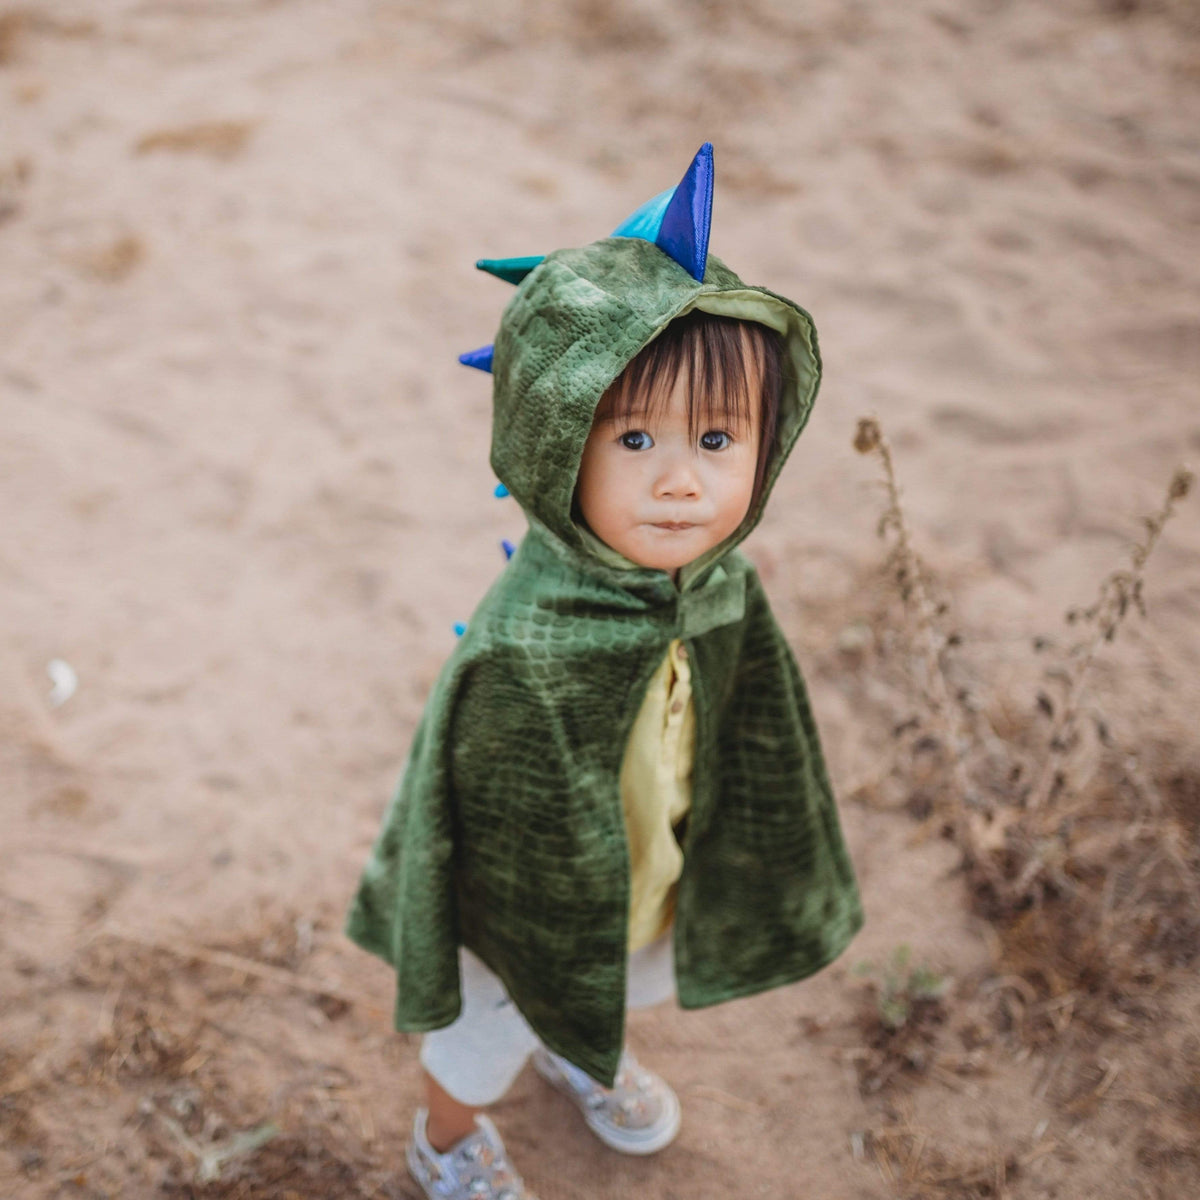 Baby dragon cape on child.